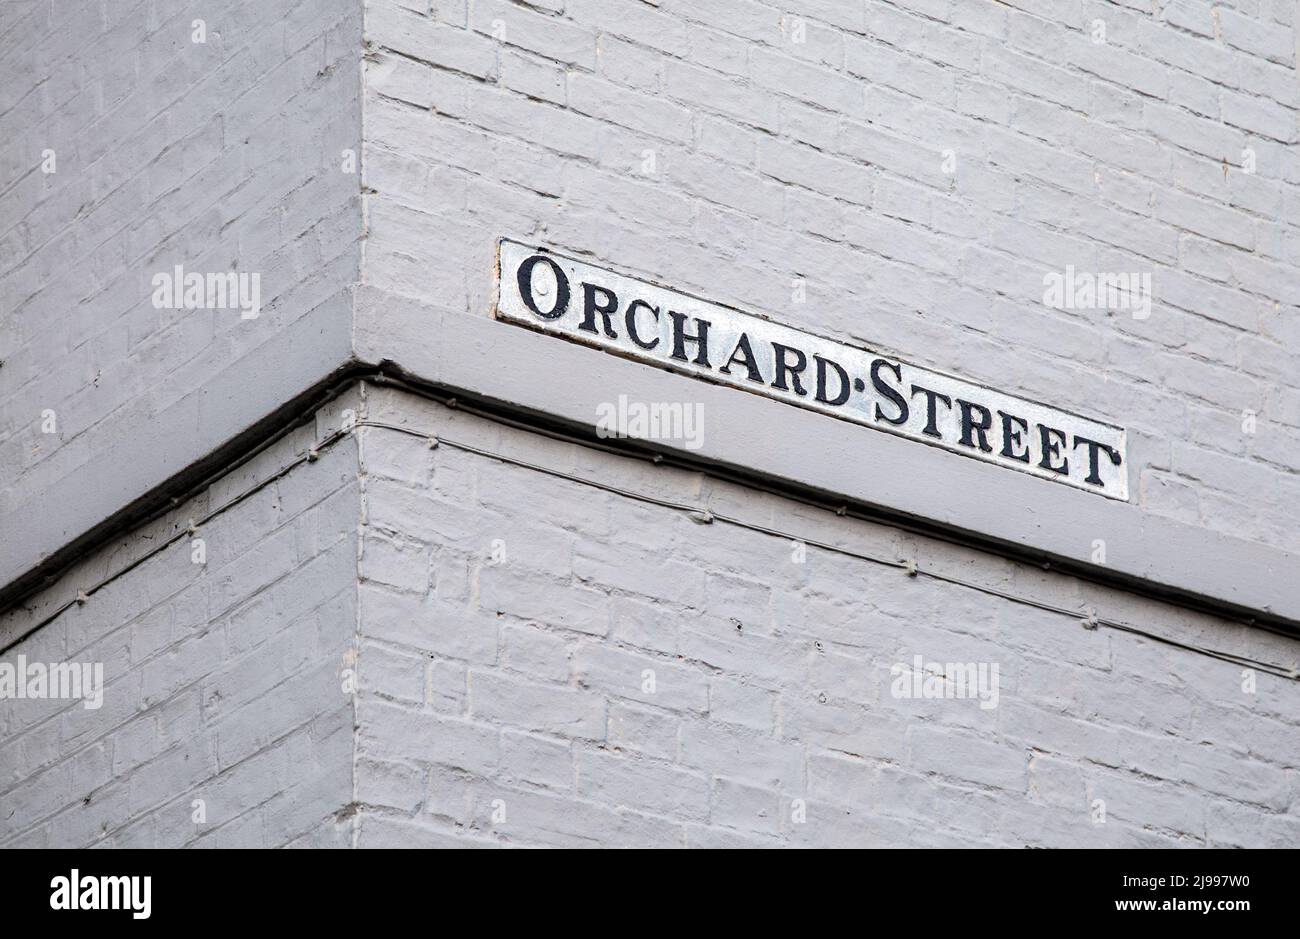 Street sign for Orchard Street in Cambridge, Cambridgeshire, UK Stock Photo